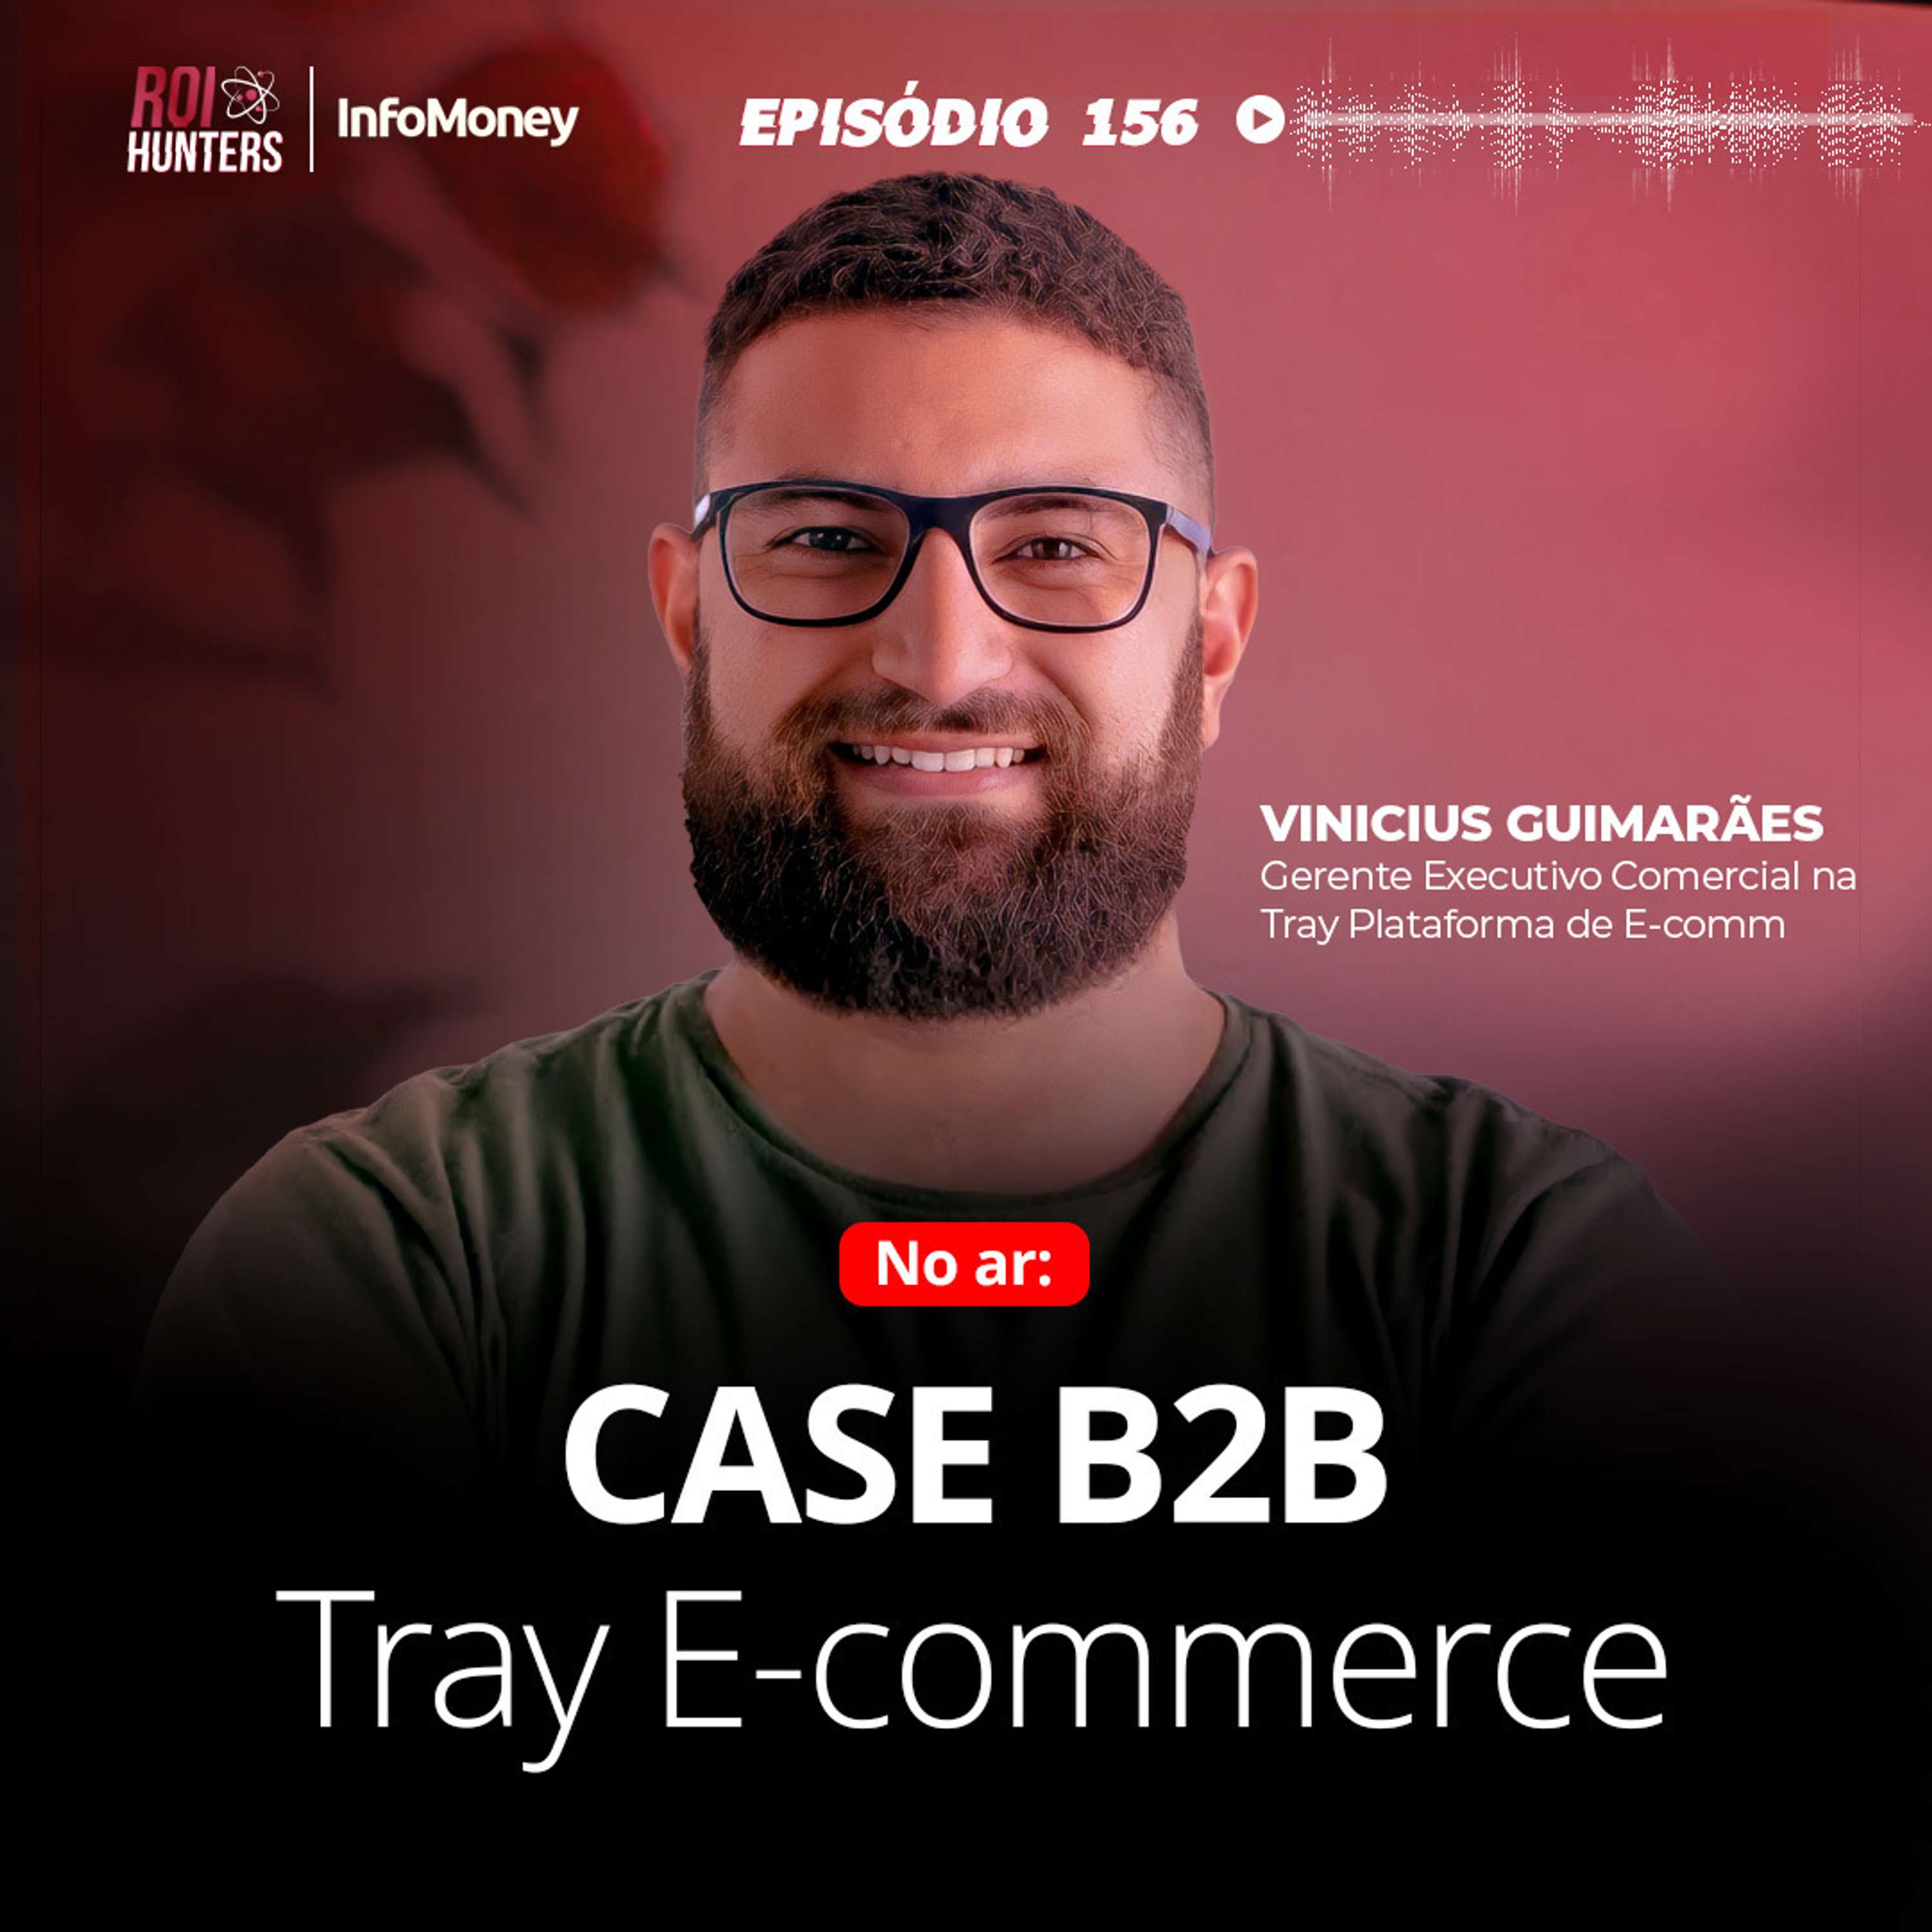 #156 - Case B2B Tray E-commerce com Vinicius Guimarães